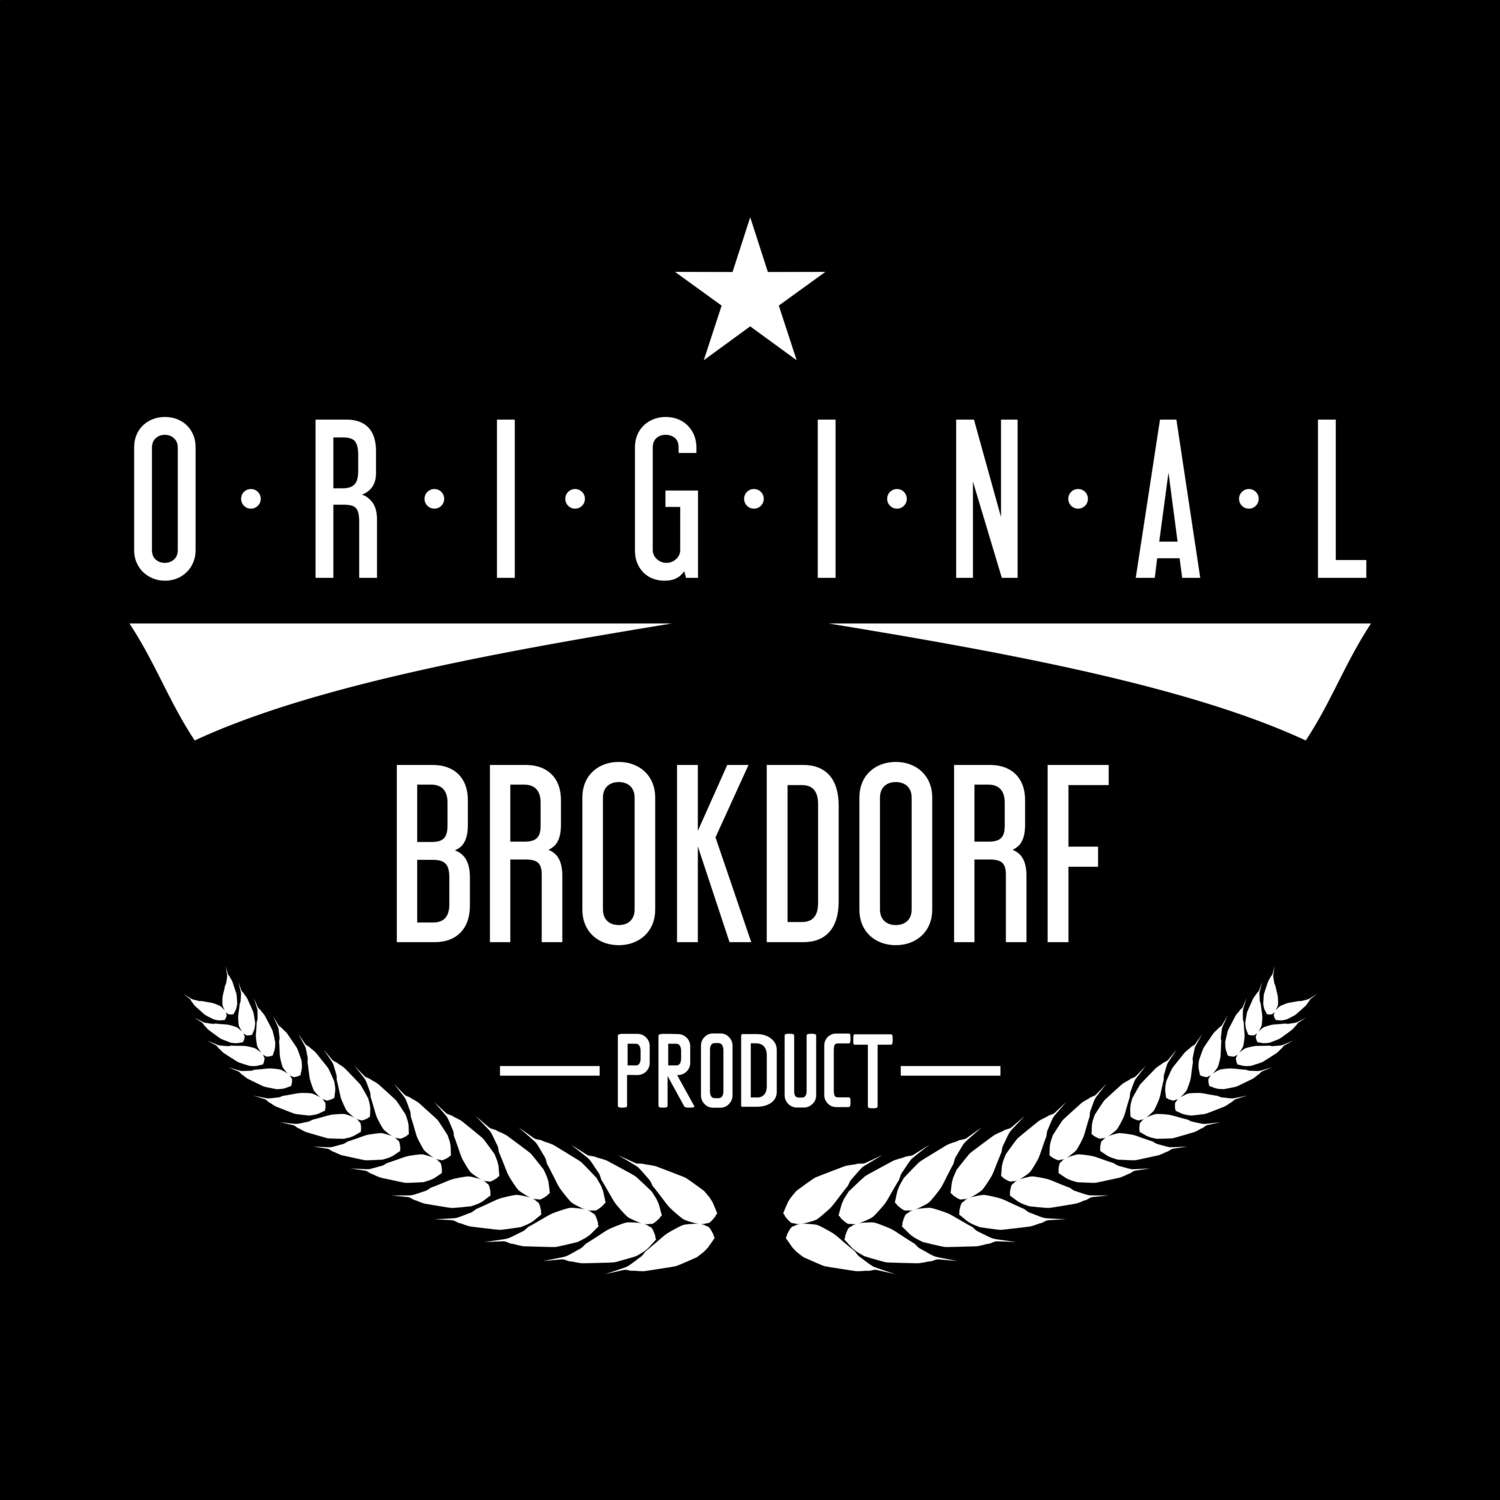 Brokdorf T-Shirt »Original Product«